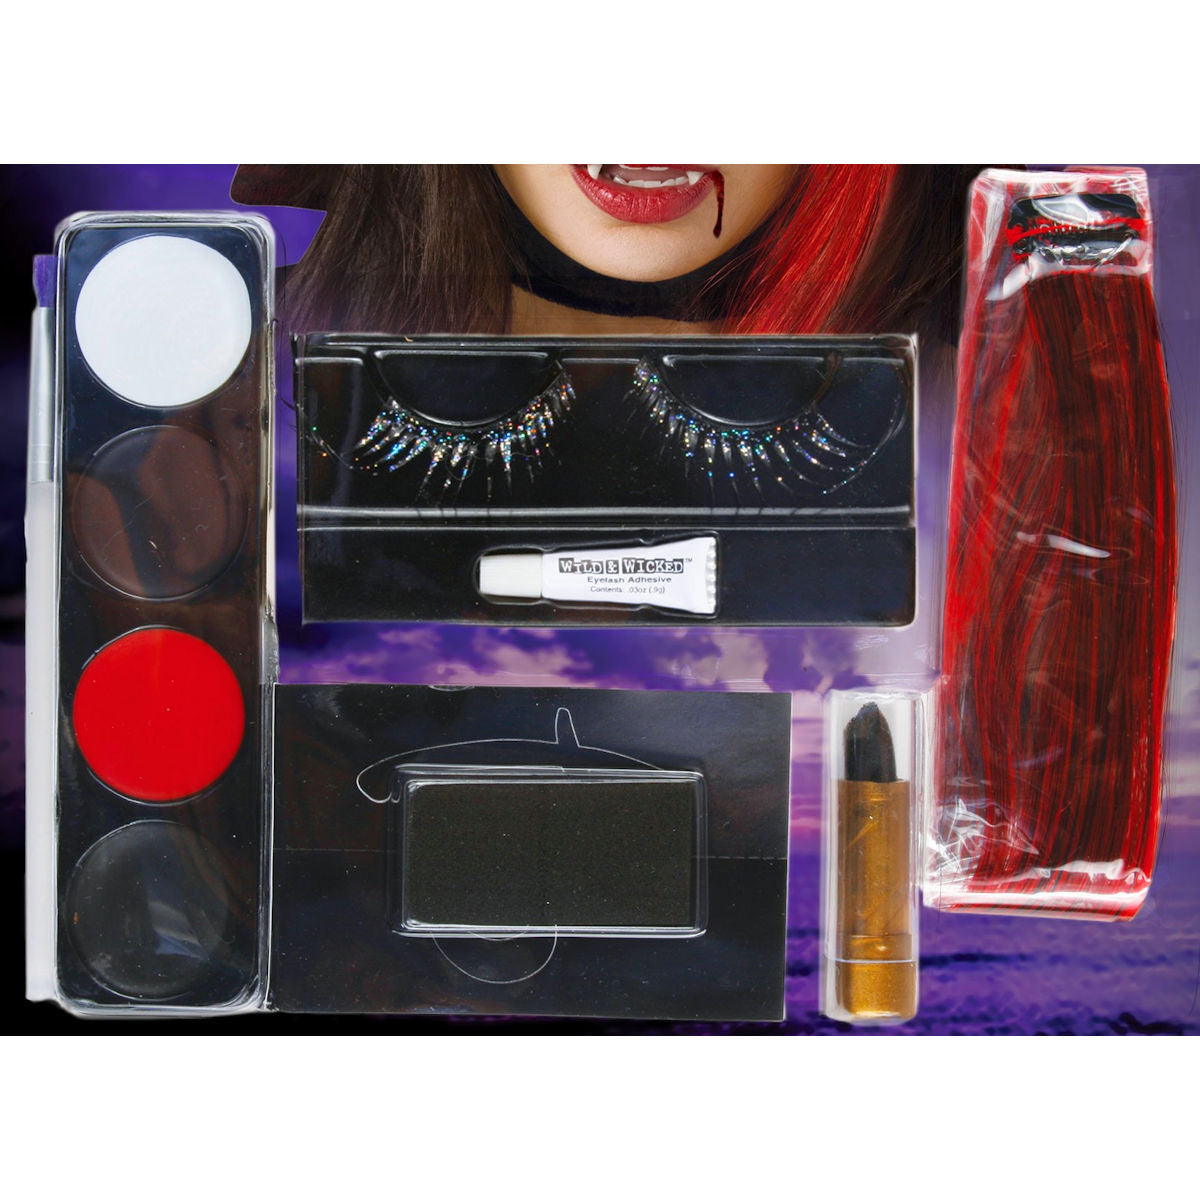 Vampire Fantasy Makeup Kit FX Halloween with Eyelashes, Lipstick & Hair